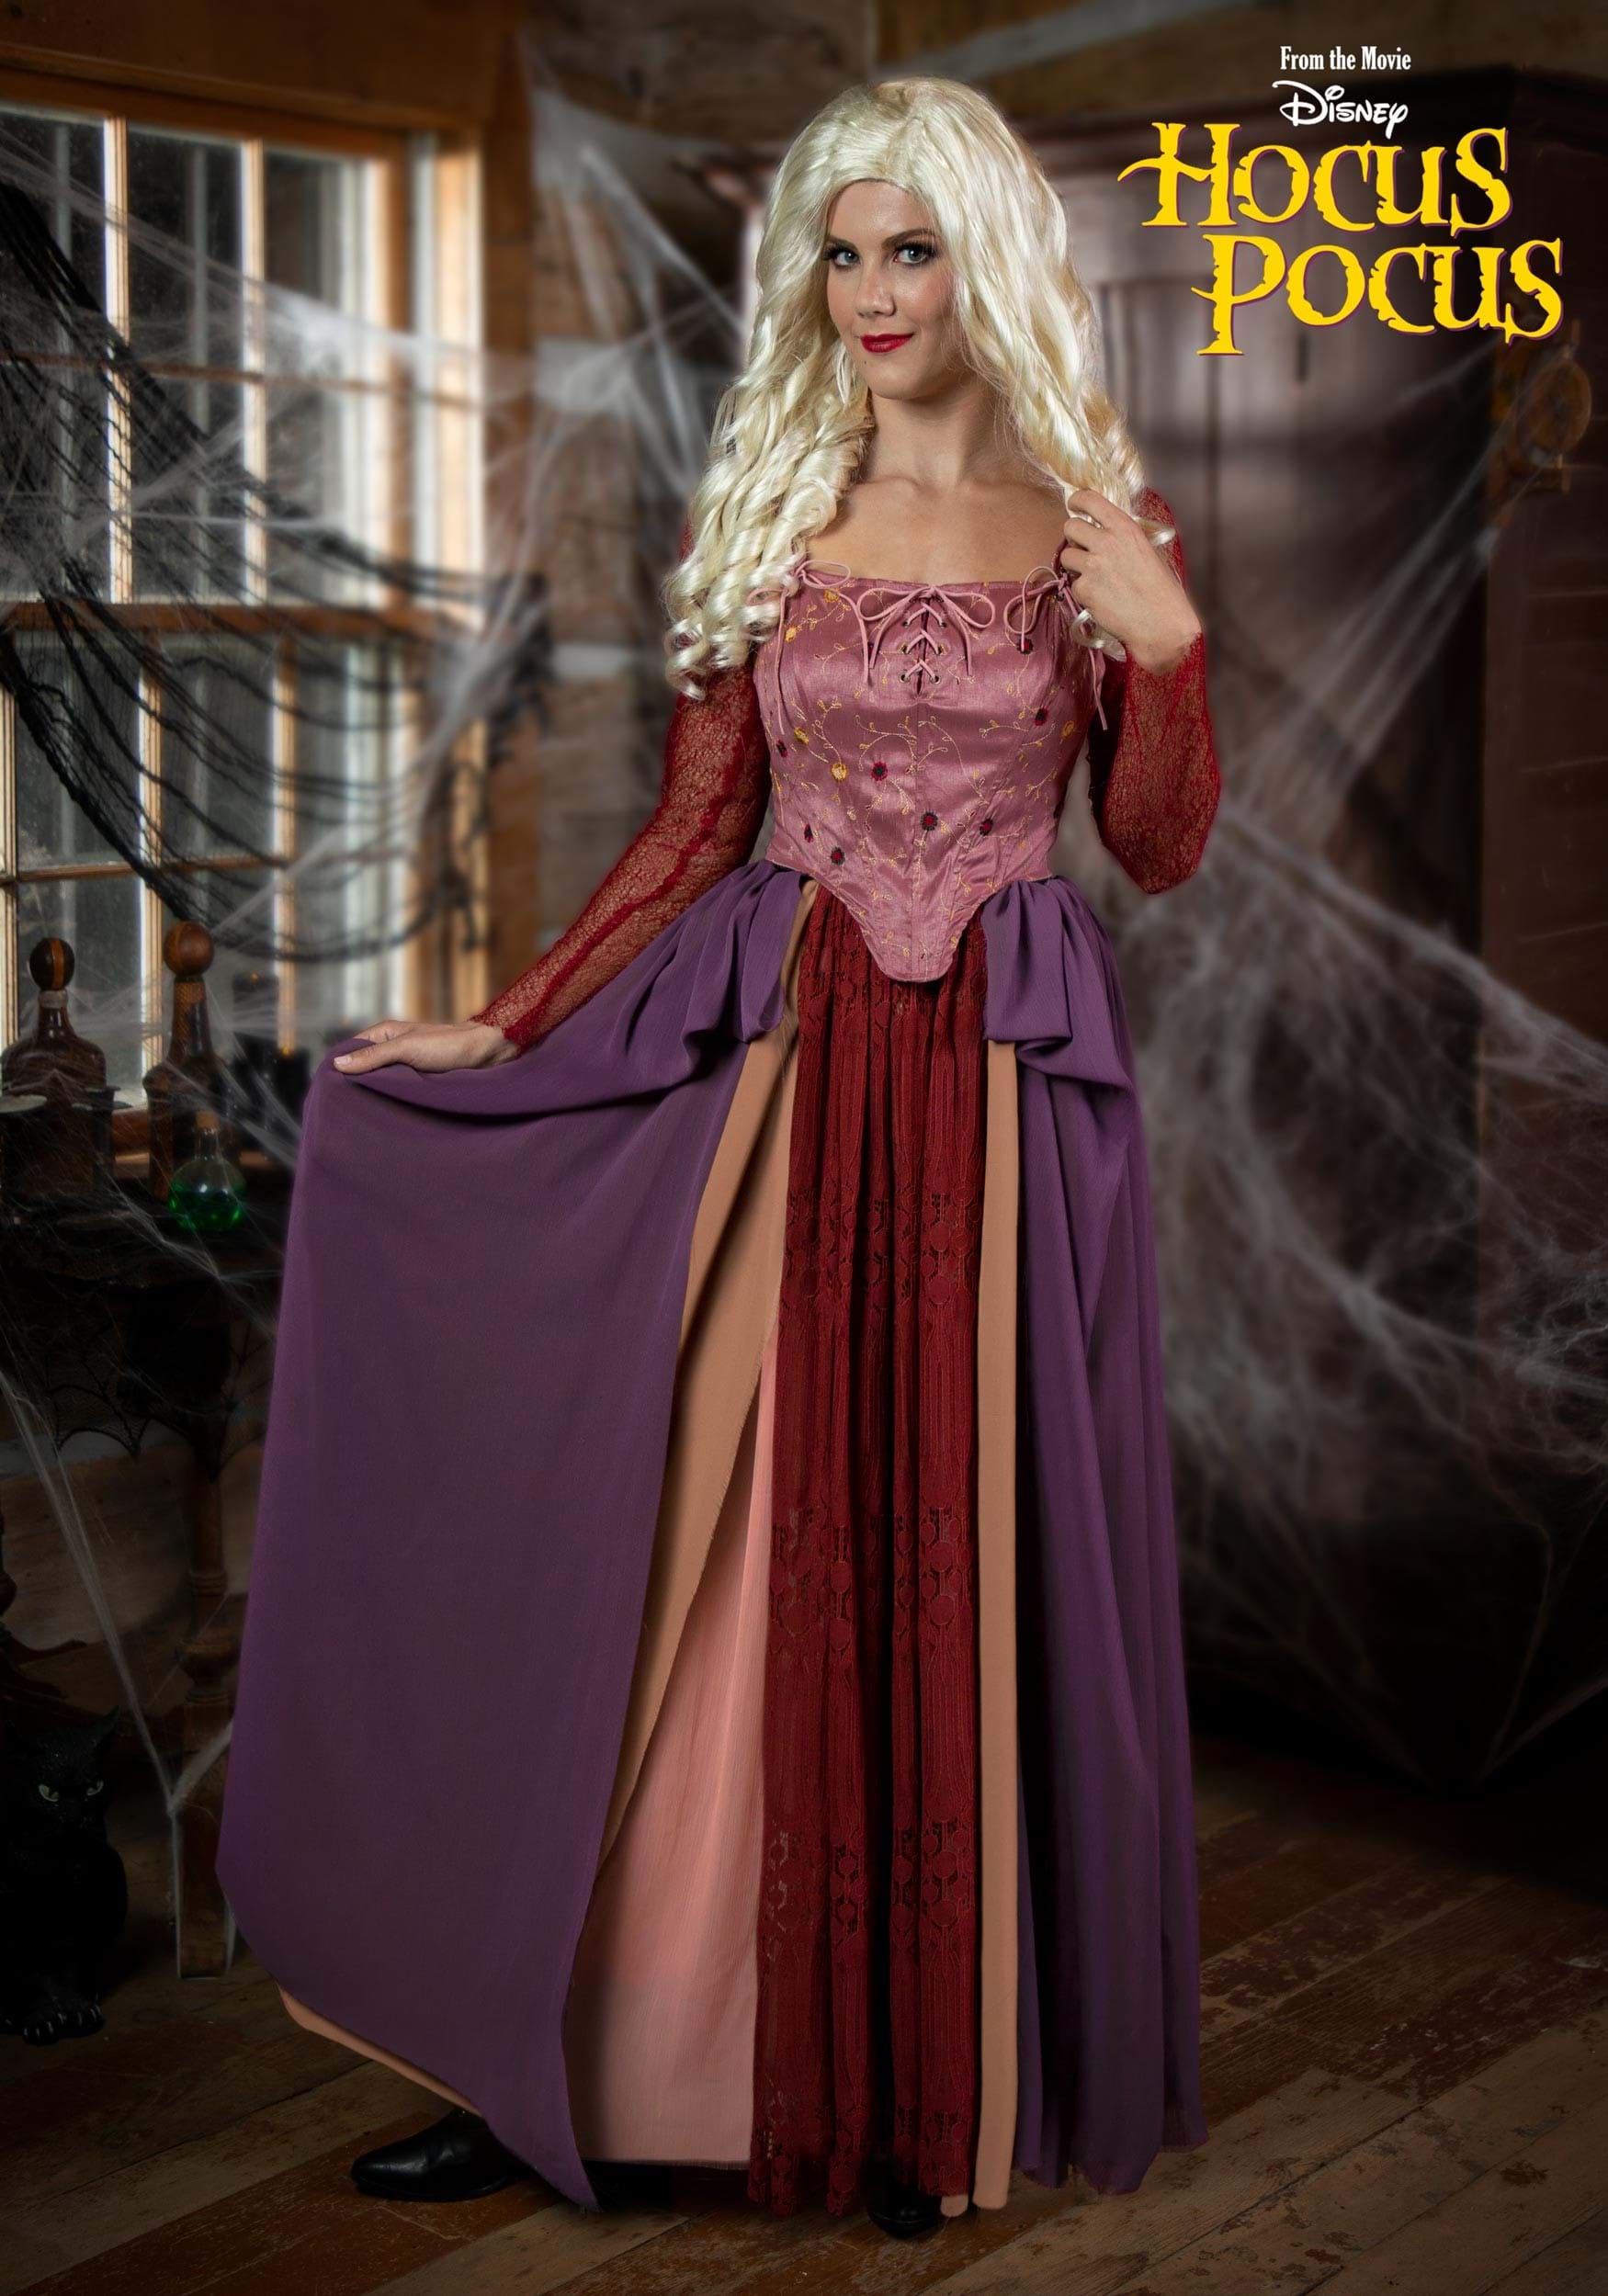 Sarah Sanderson Costume for Women from Disney’s Hocus Pocus - Mad Halloween